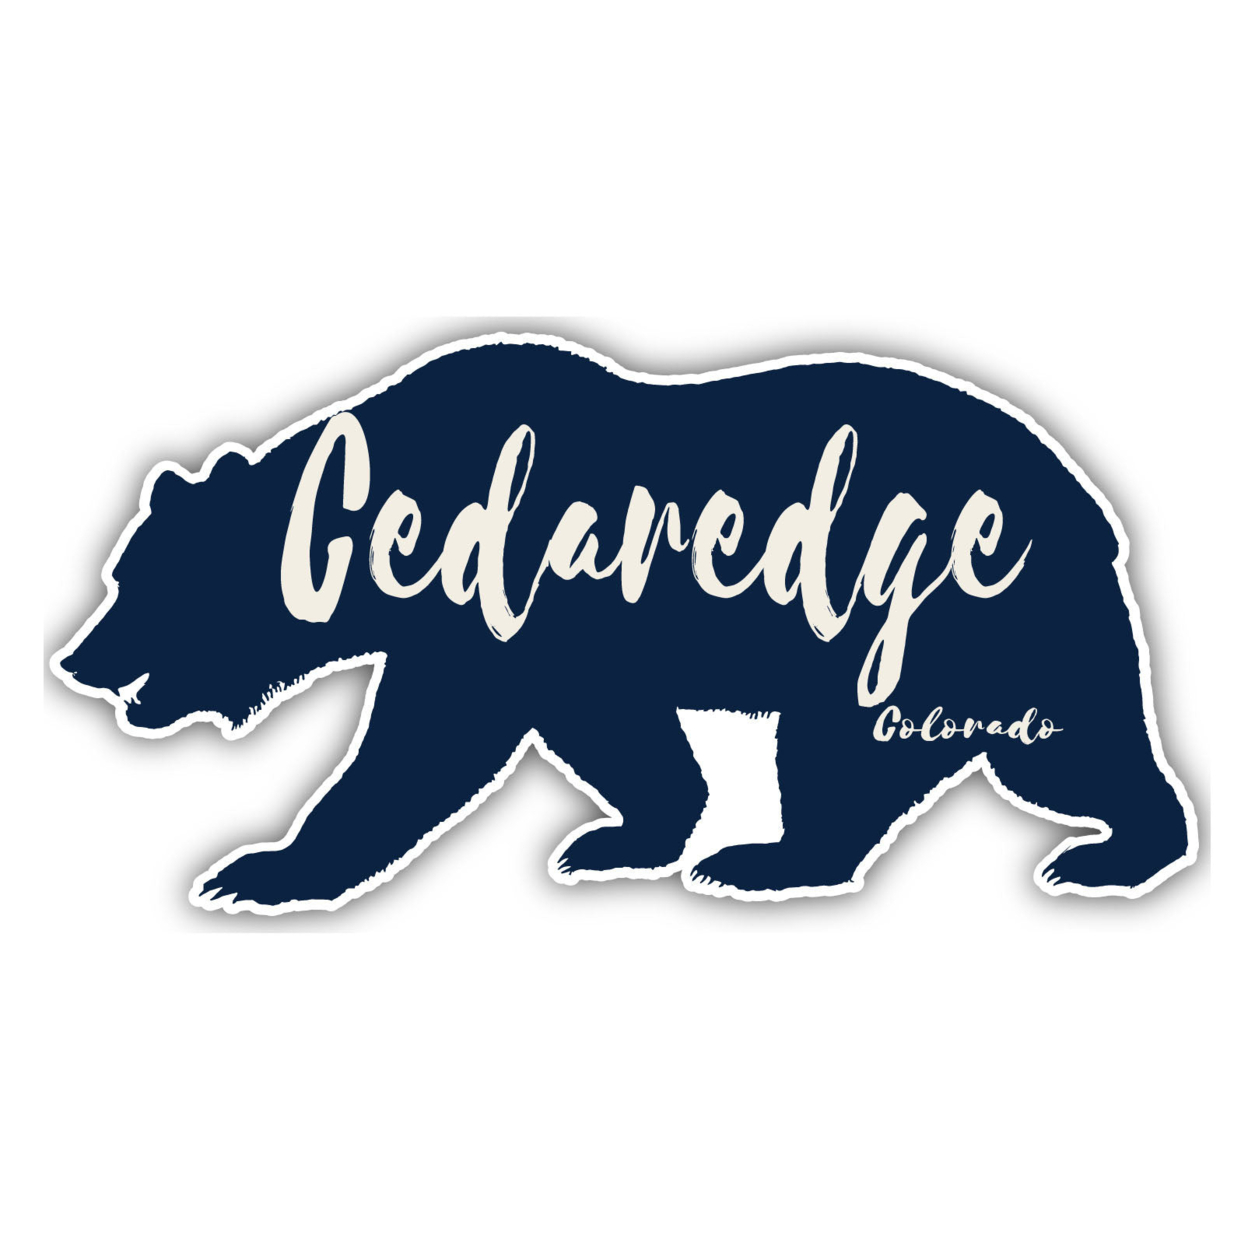 Cedaredge Colorado Souvenir Decorative Stickers (Choose Theme And Size) - 4-Pack, 10-Inch, Bear